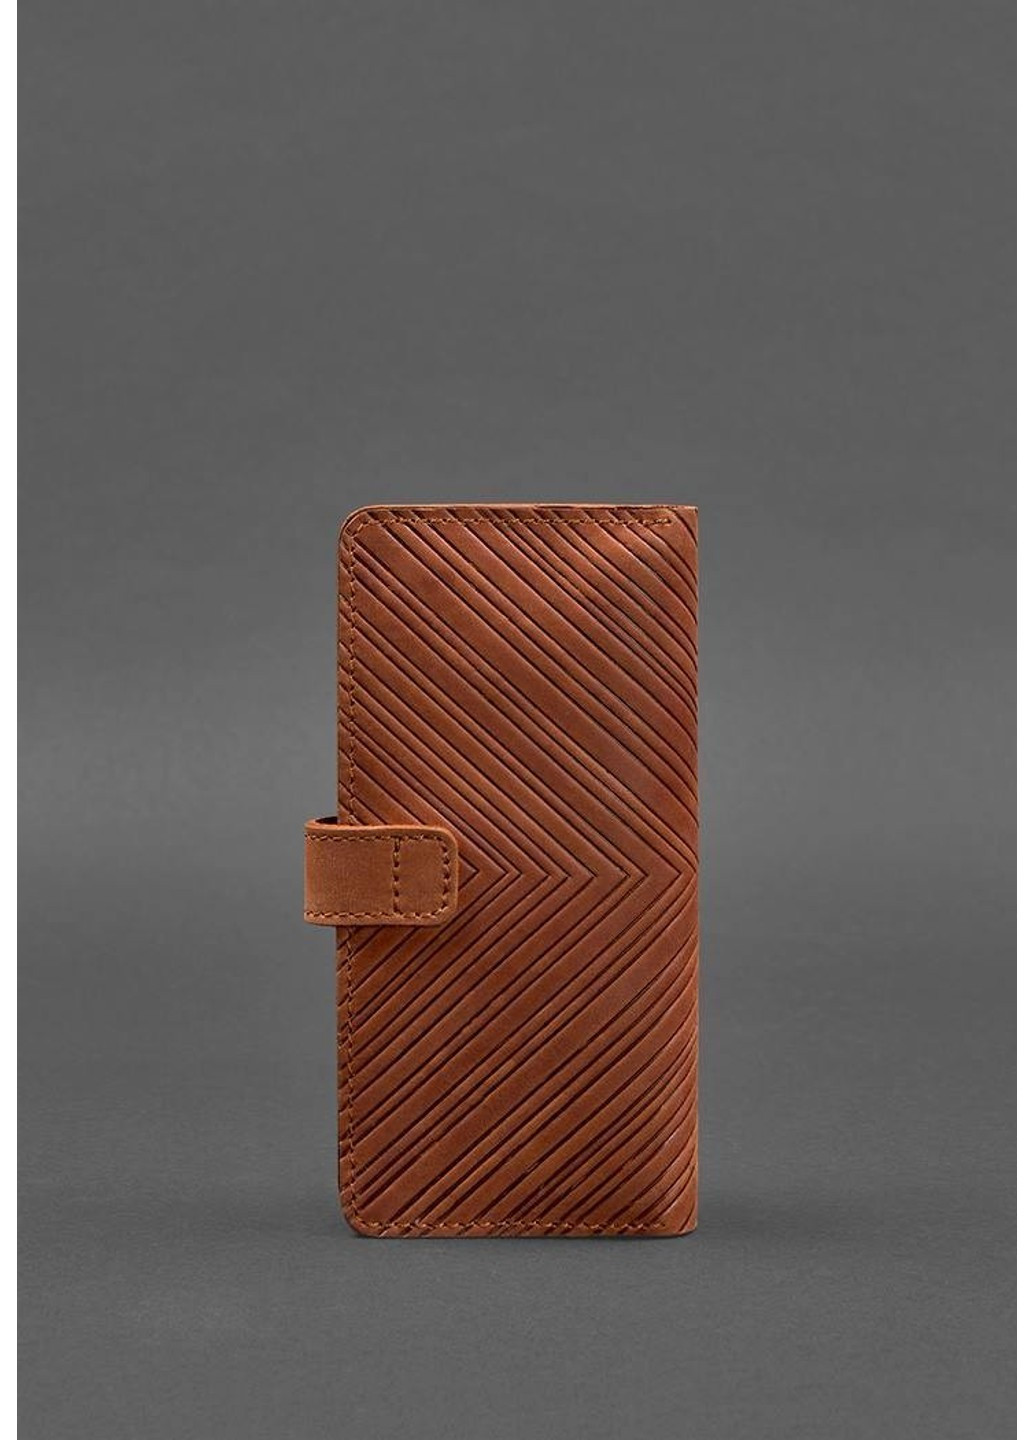 Женское кожаное портмоне 7.0 Инди светло-коричневое BN-PM-7-K-KR-LS BlankNote (263519118)